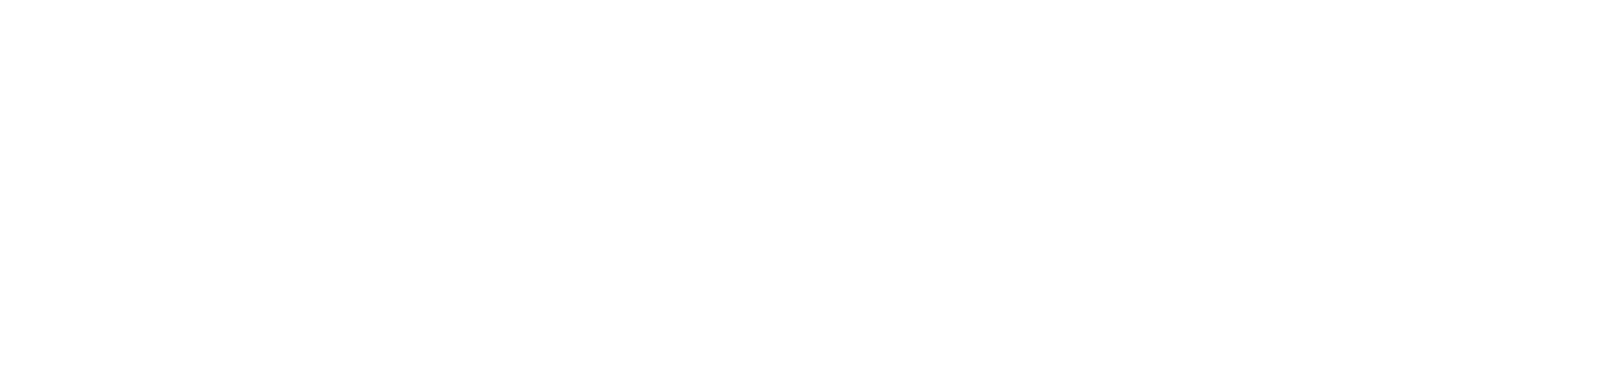 Breville Group Logo groß für dunkle Hintergründe (transparentes PNG)